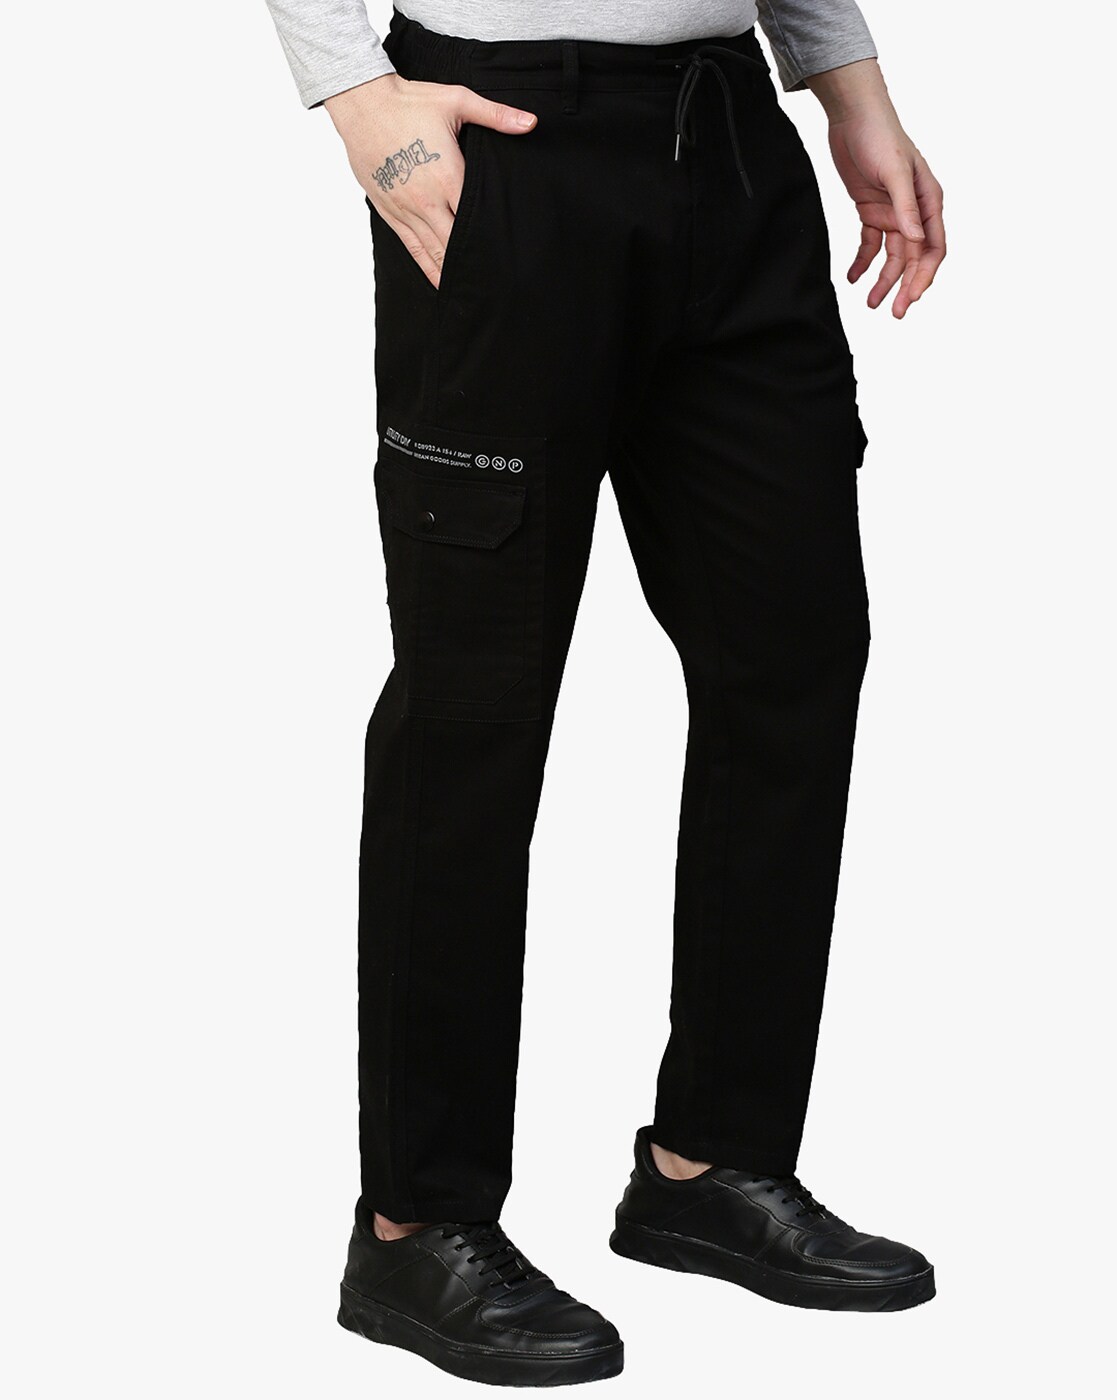 HSQIBAOER Women Men Cargo Pants Chain Pockets Ankle Trousers High Waist  Chain Hip-Hop Punk Black Harem Pants Streetwear Black No Chain XS :  Amazon.co.uk: Fashion